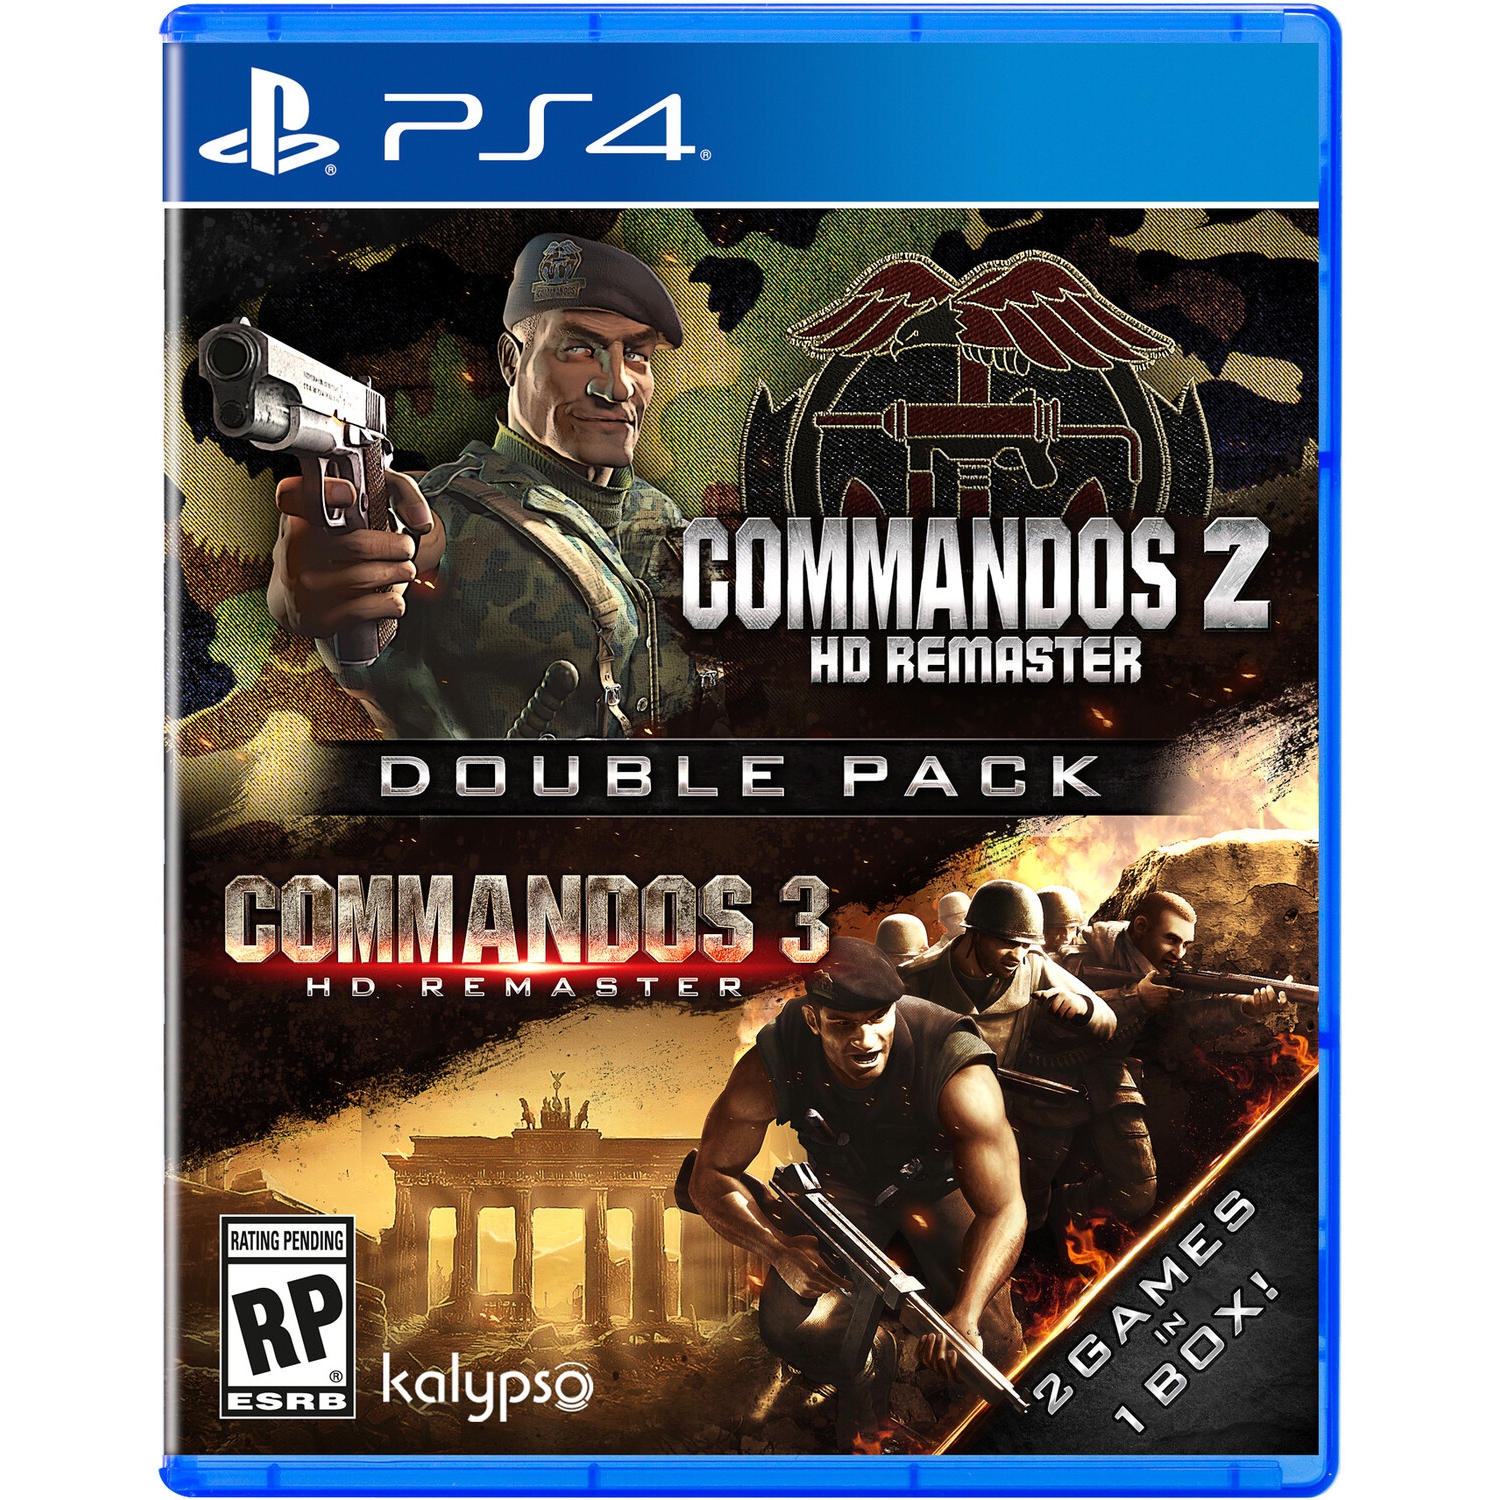 Commandos Double Pack (COMMANDOs 2 HD & COMMANDOS 3 HD) for PlayStation 4 [VIDEOGAMES]